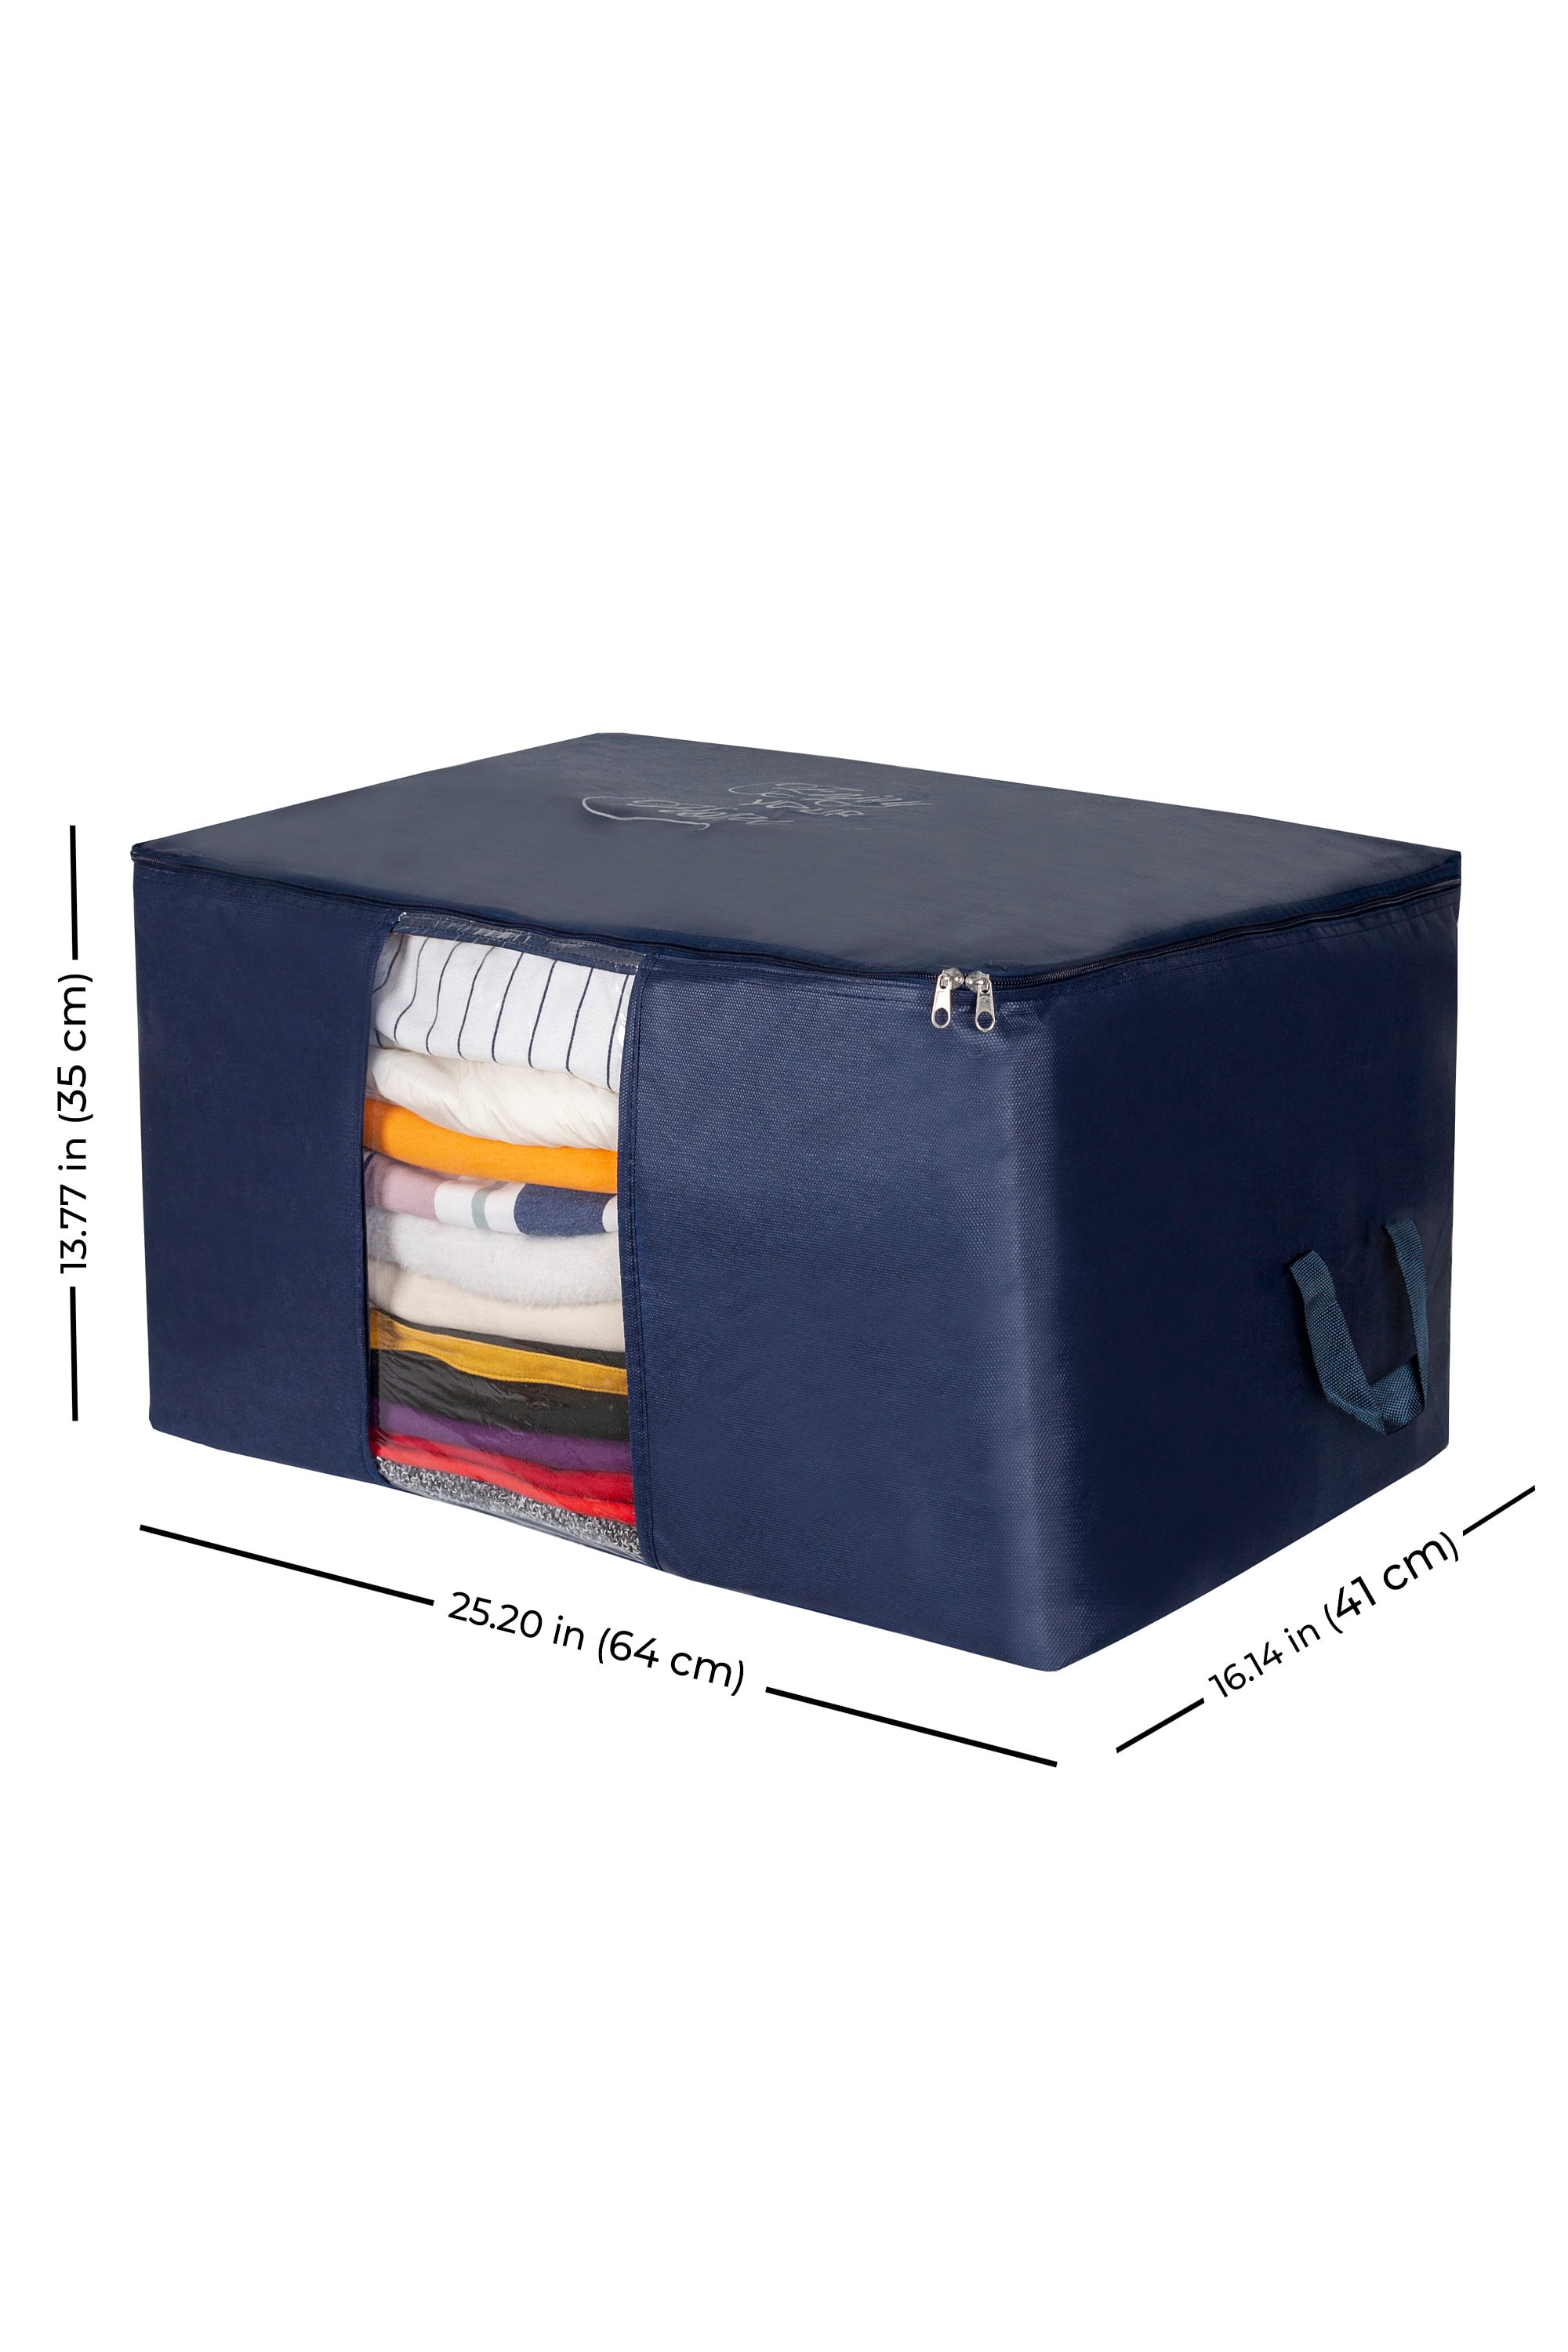 Premium Heavy Weight Plastic Slide Storage BagsSize Options: 1 Gallon  Storage Bag